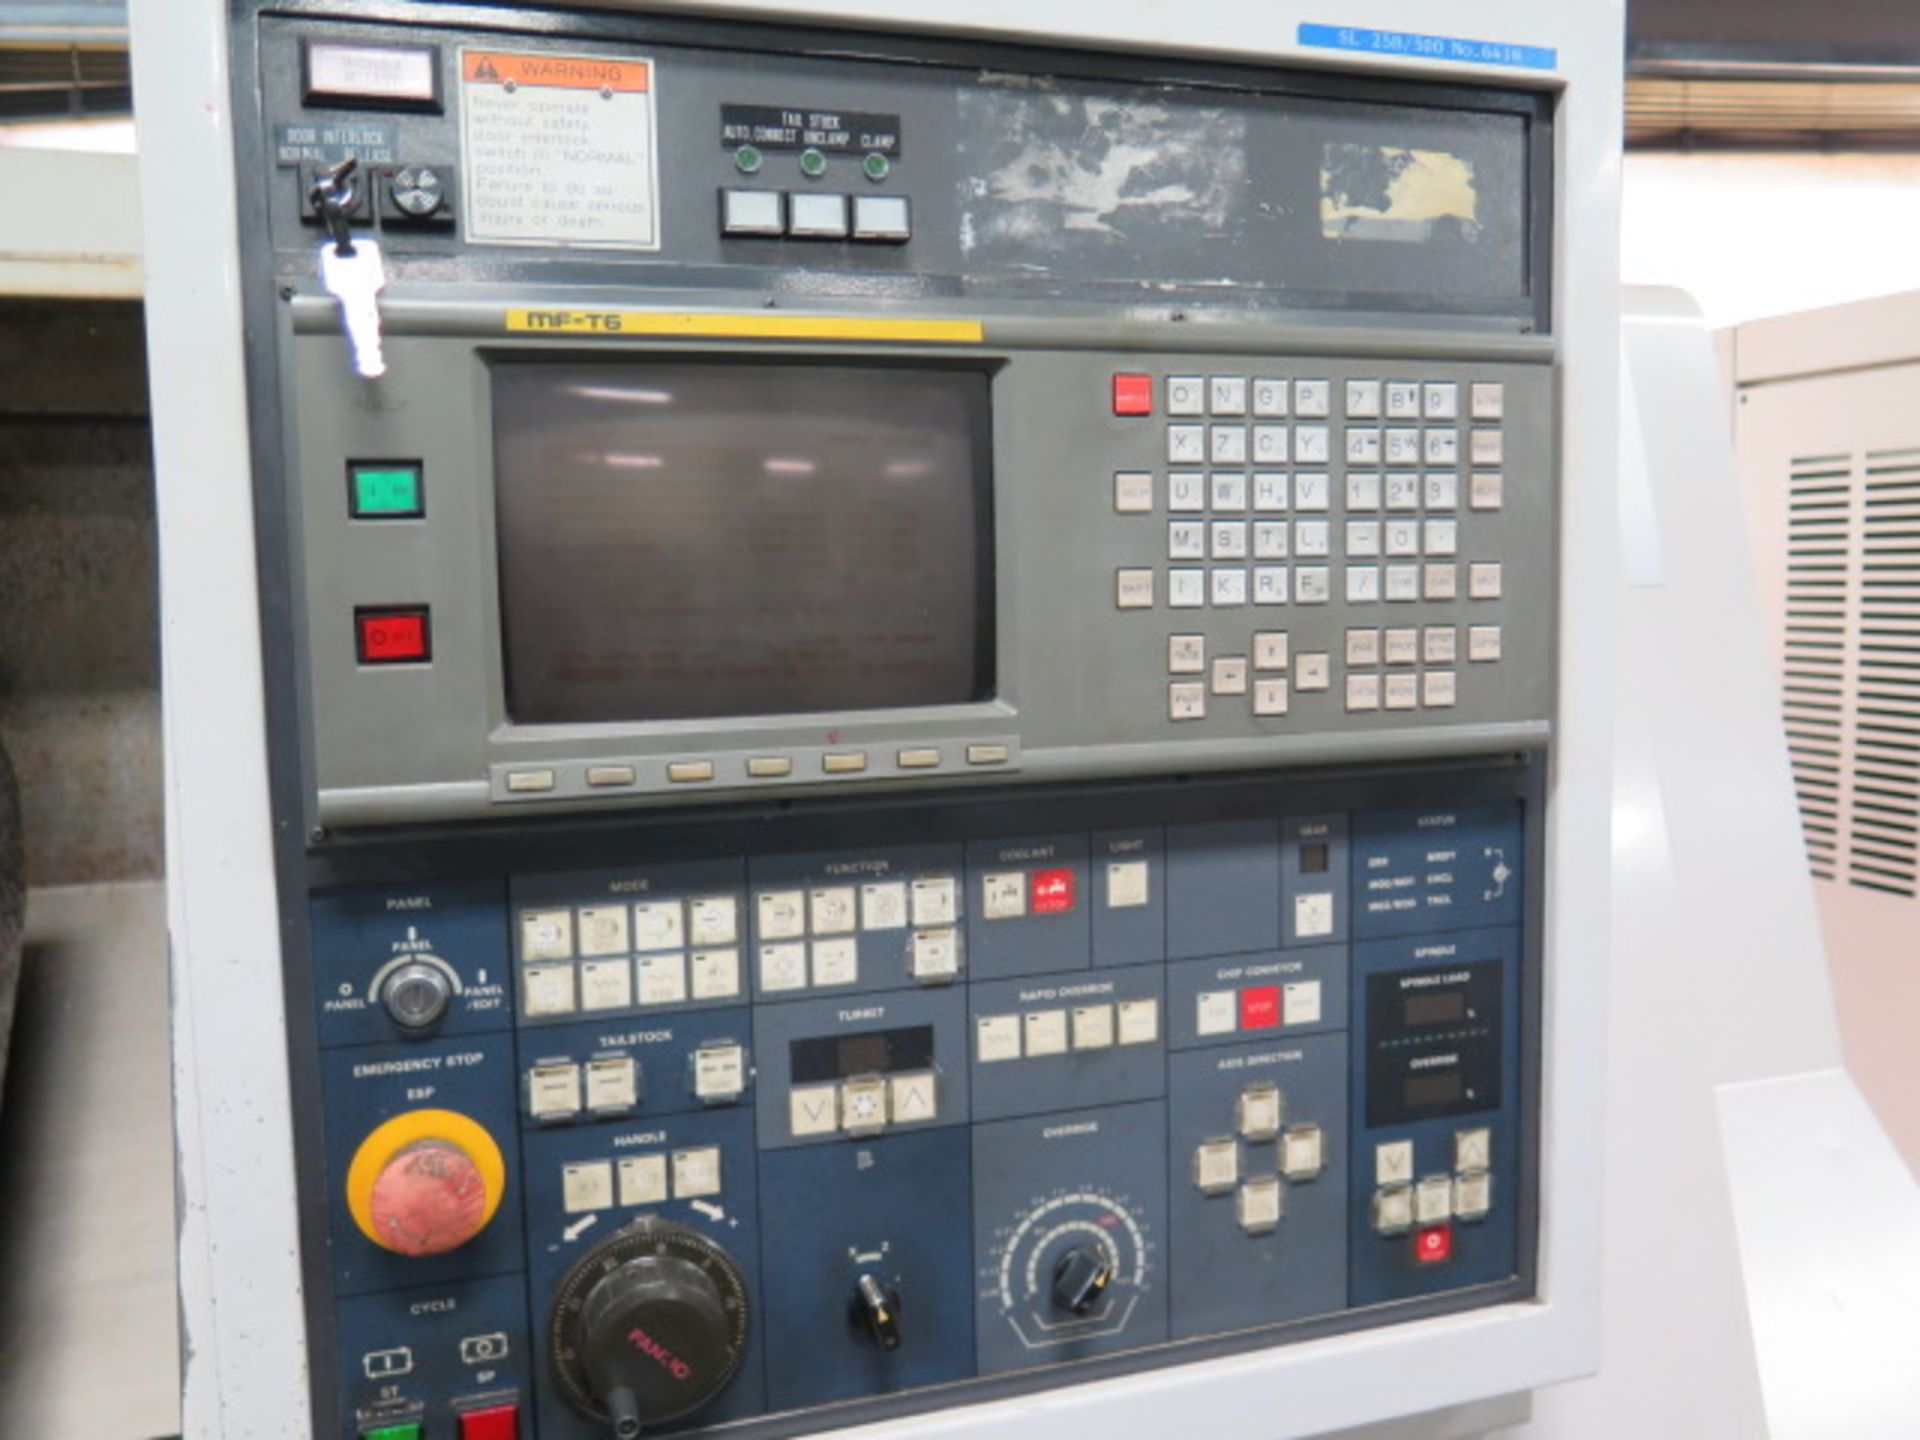 Mori Seiki SL-25B CNC Turning Center s/n 6418 (HAS ALARM) w/ Fanuc Series MF-T6 Controls, SOLD AS IS - Image 10 of 12